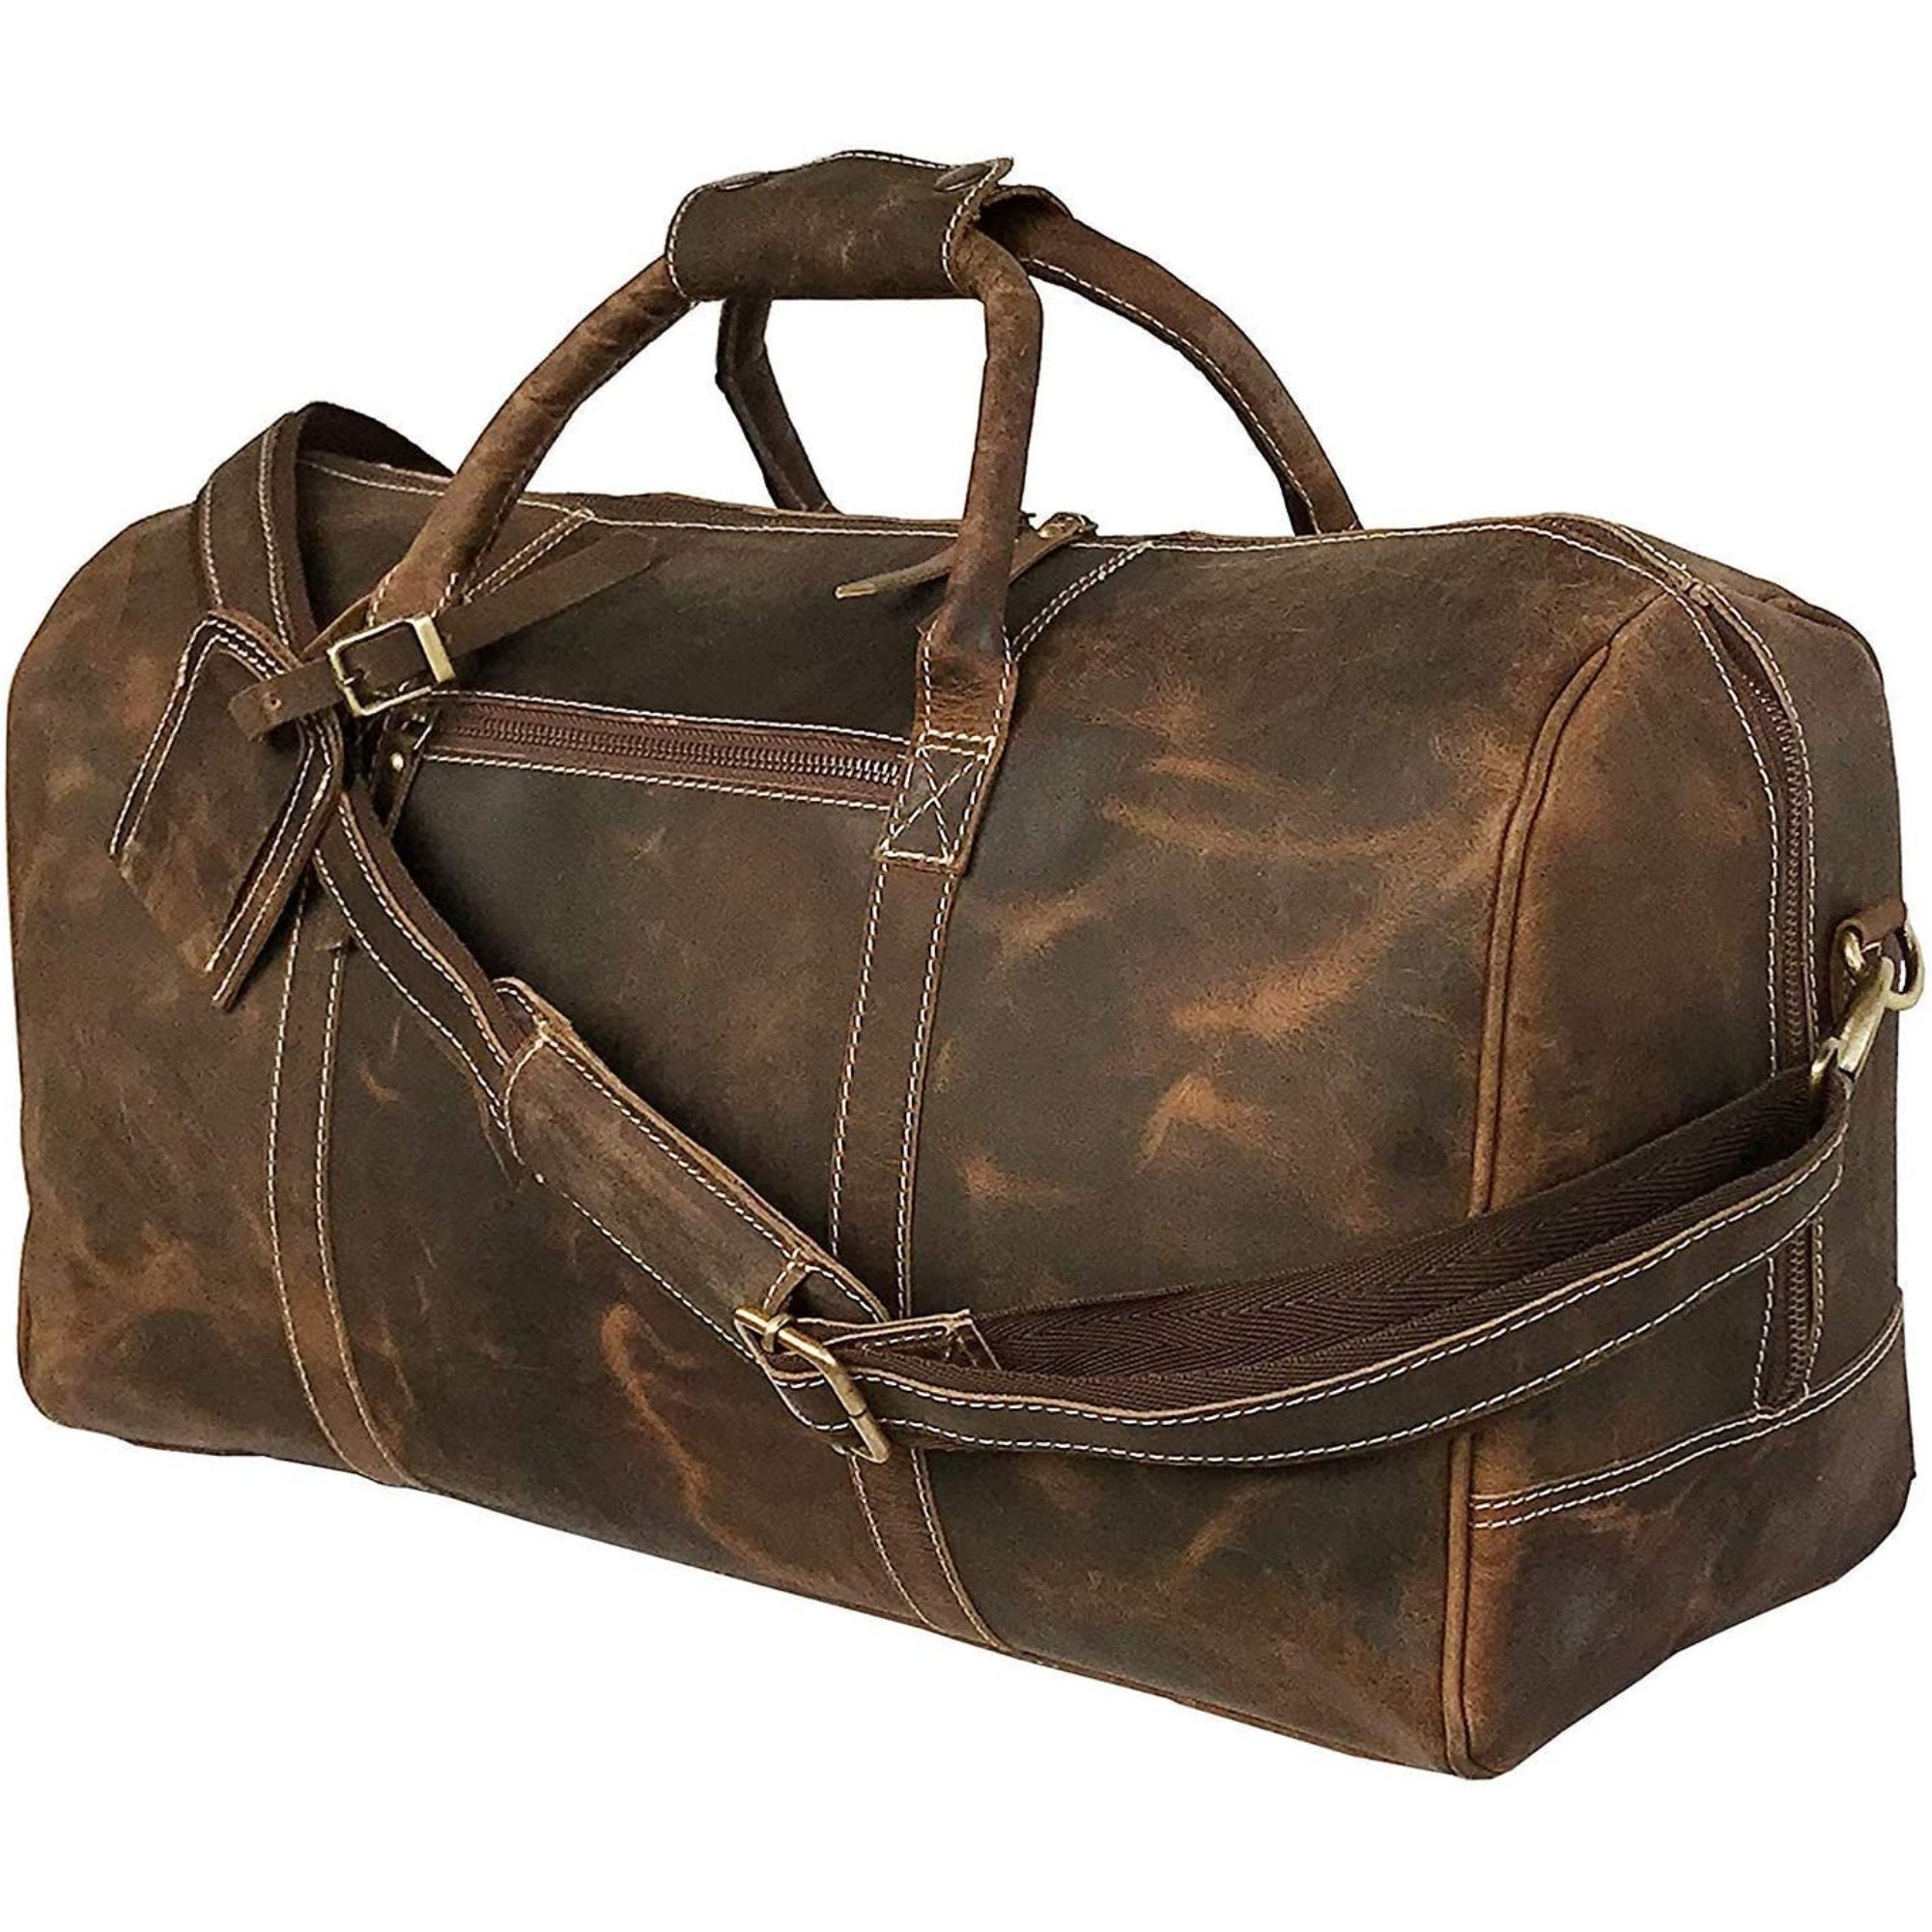 Jaald 20 Buffalo Leather Duffle Bag Travel Carry-on Luggage Overnight Gym  Weekender Bag